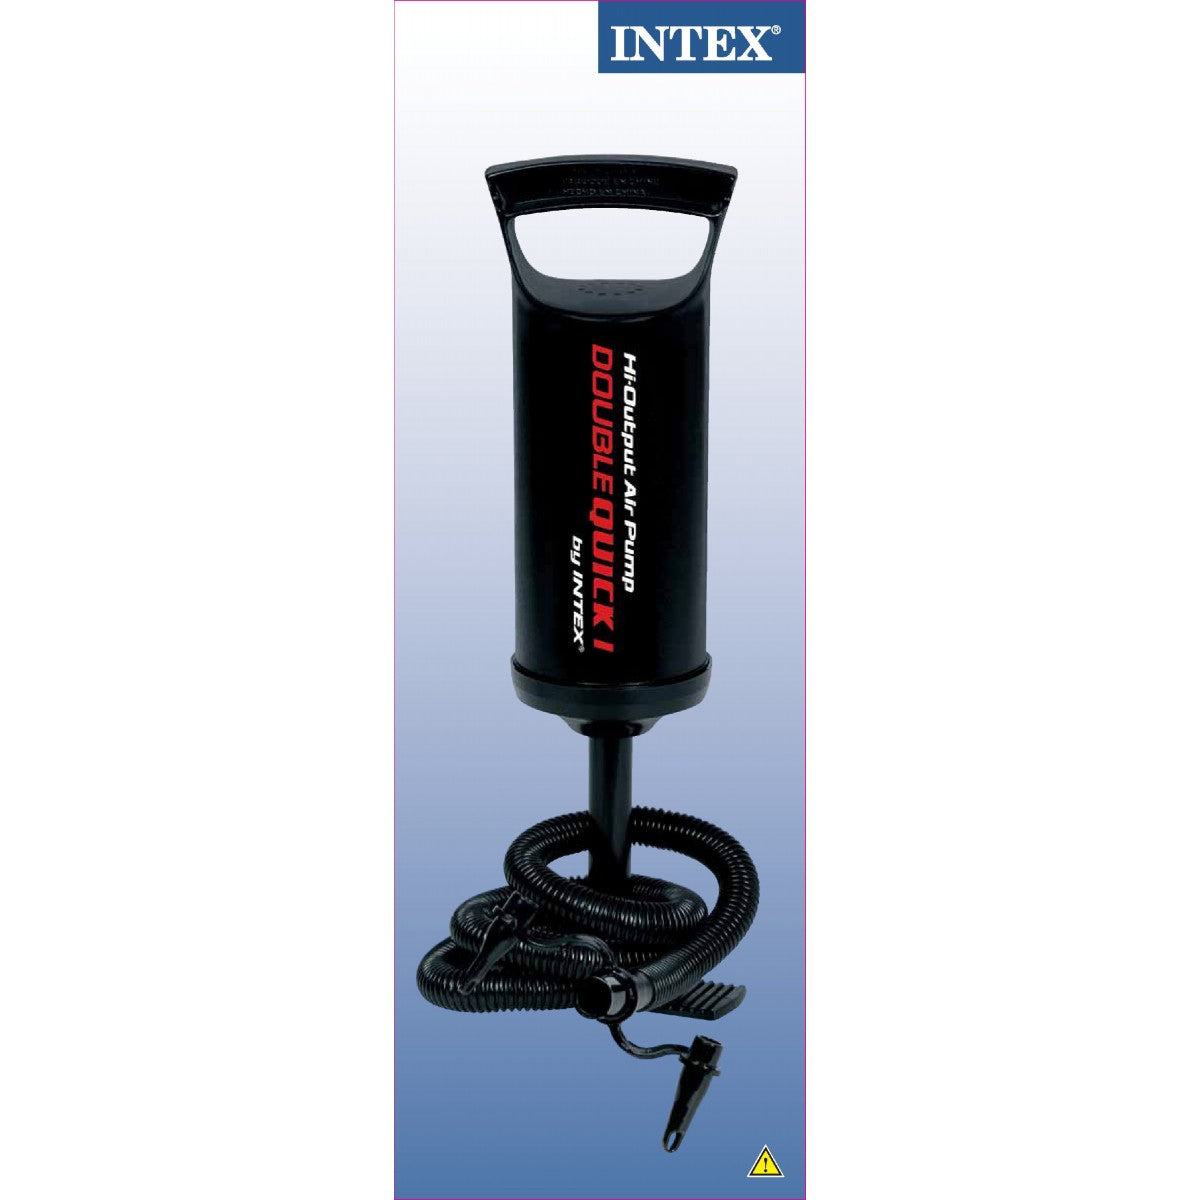 INTEX Hi-Output Air Pump Hand Pump 